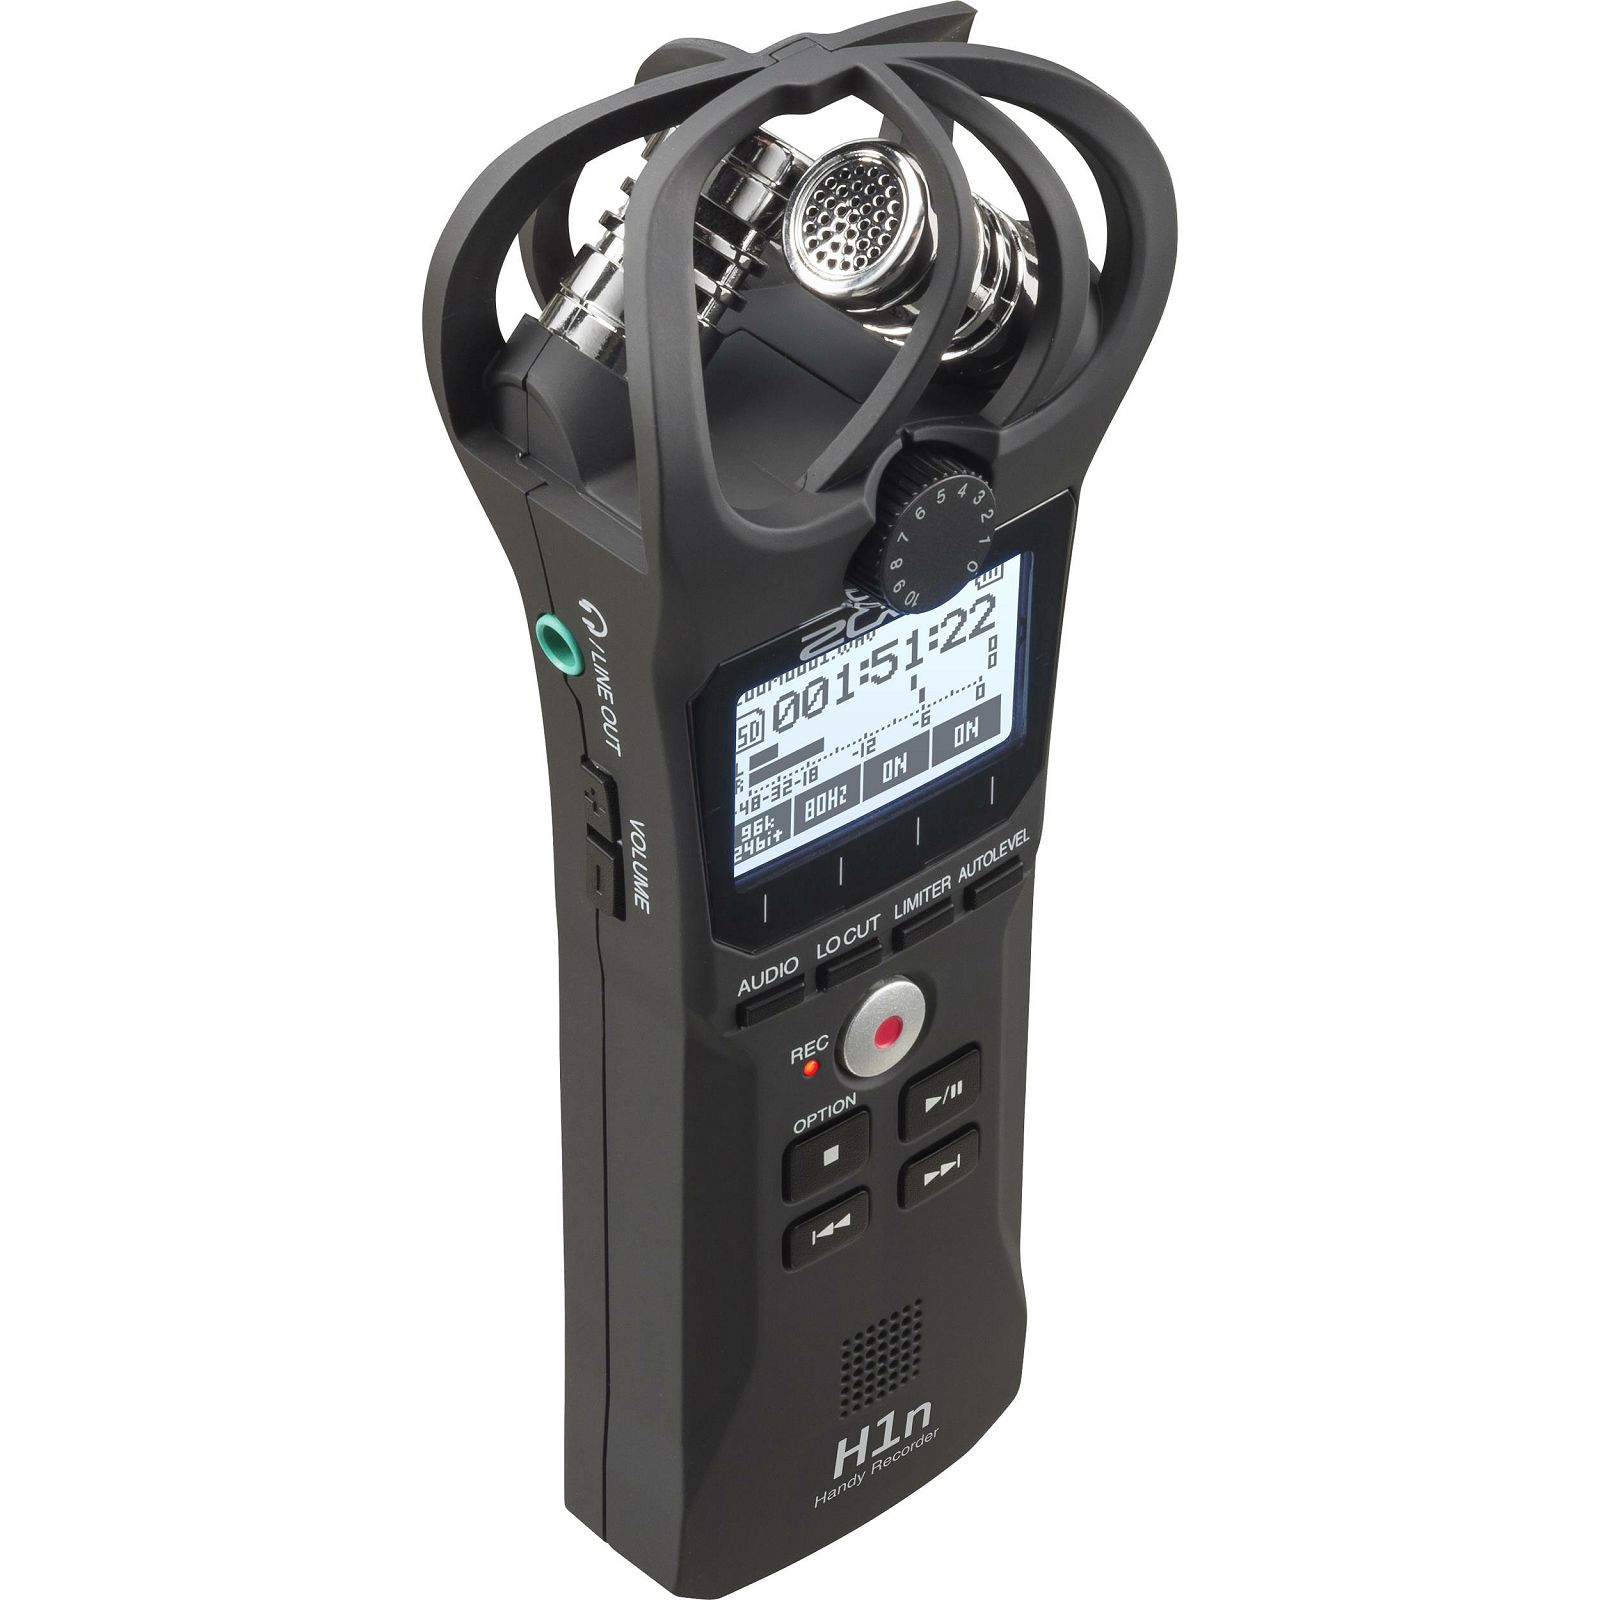 Zoom H1N Ultra-Portable Digital Audio Recorder Black prijenosni ručni snimač (314749)